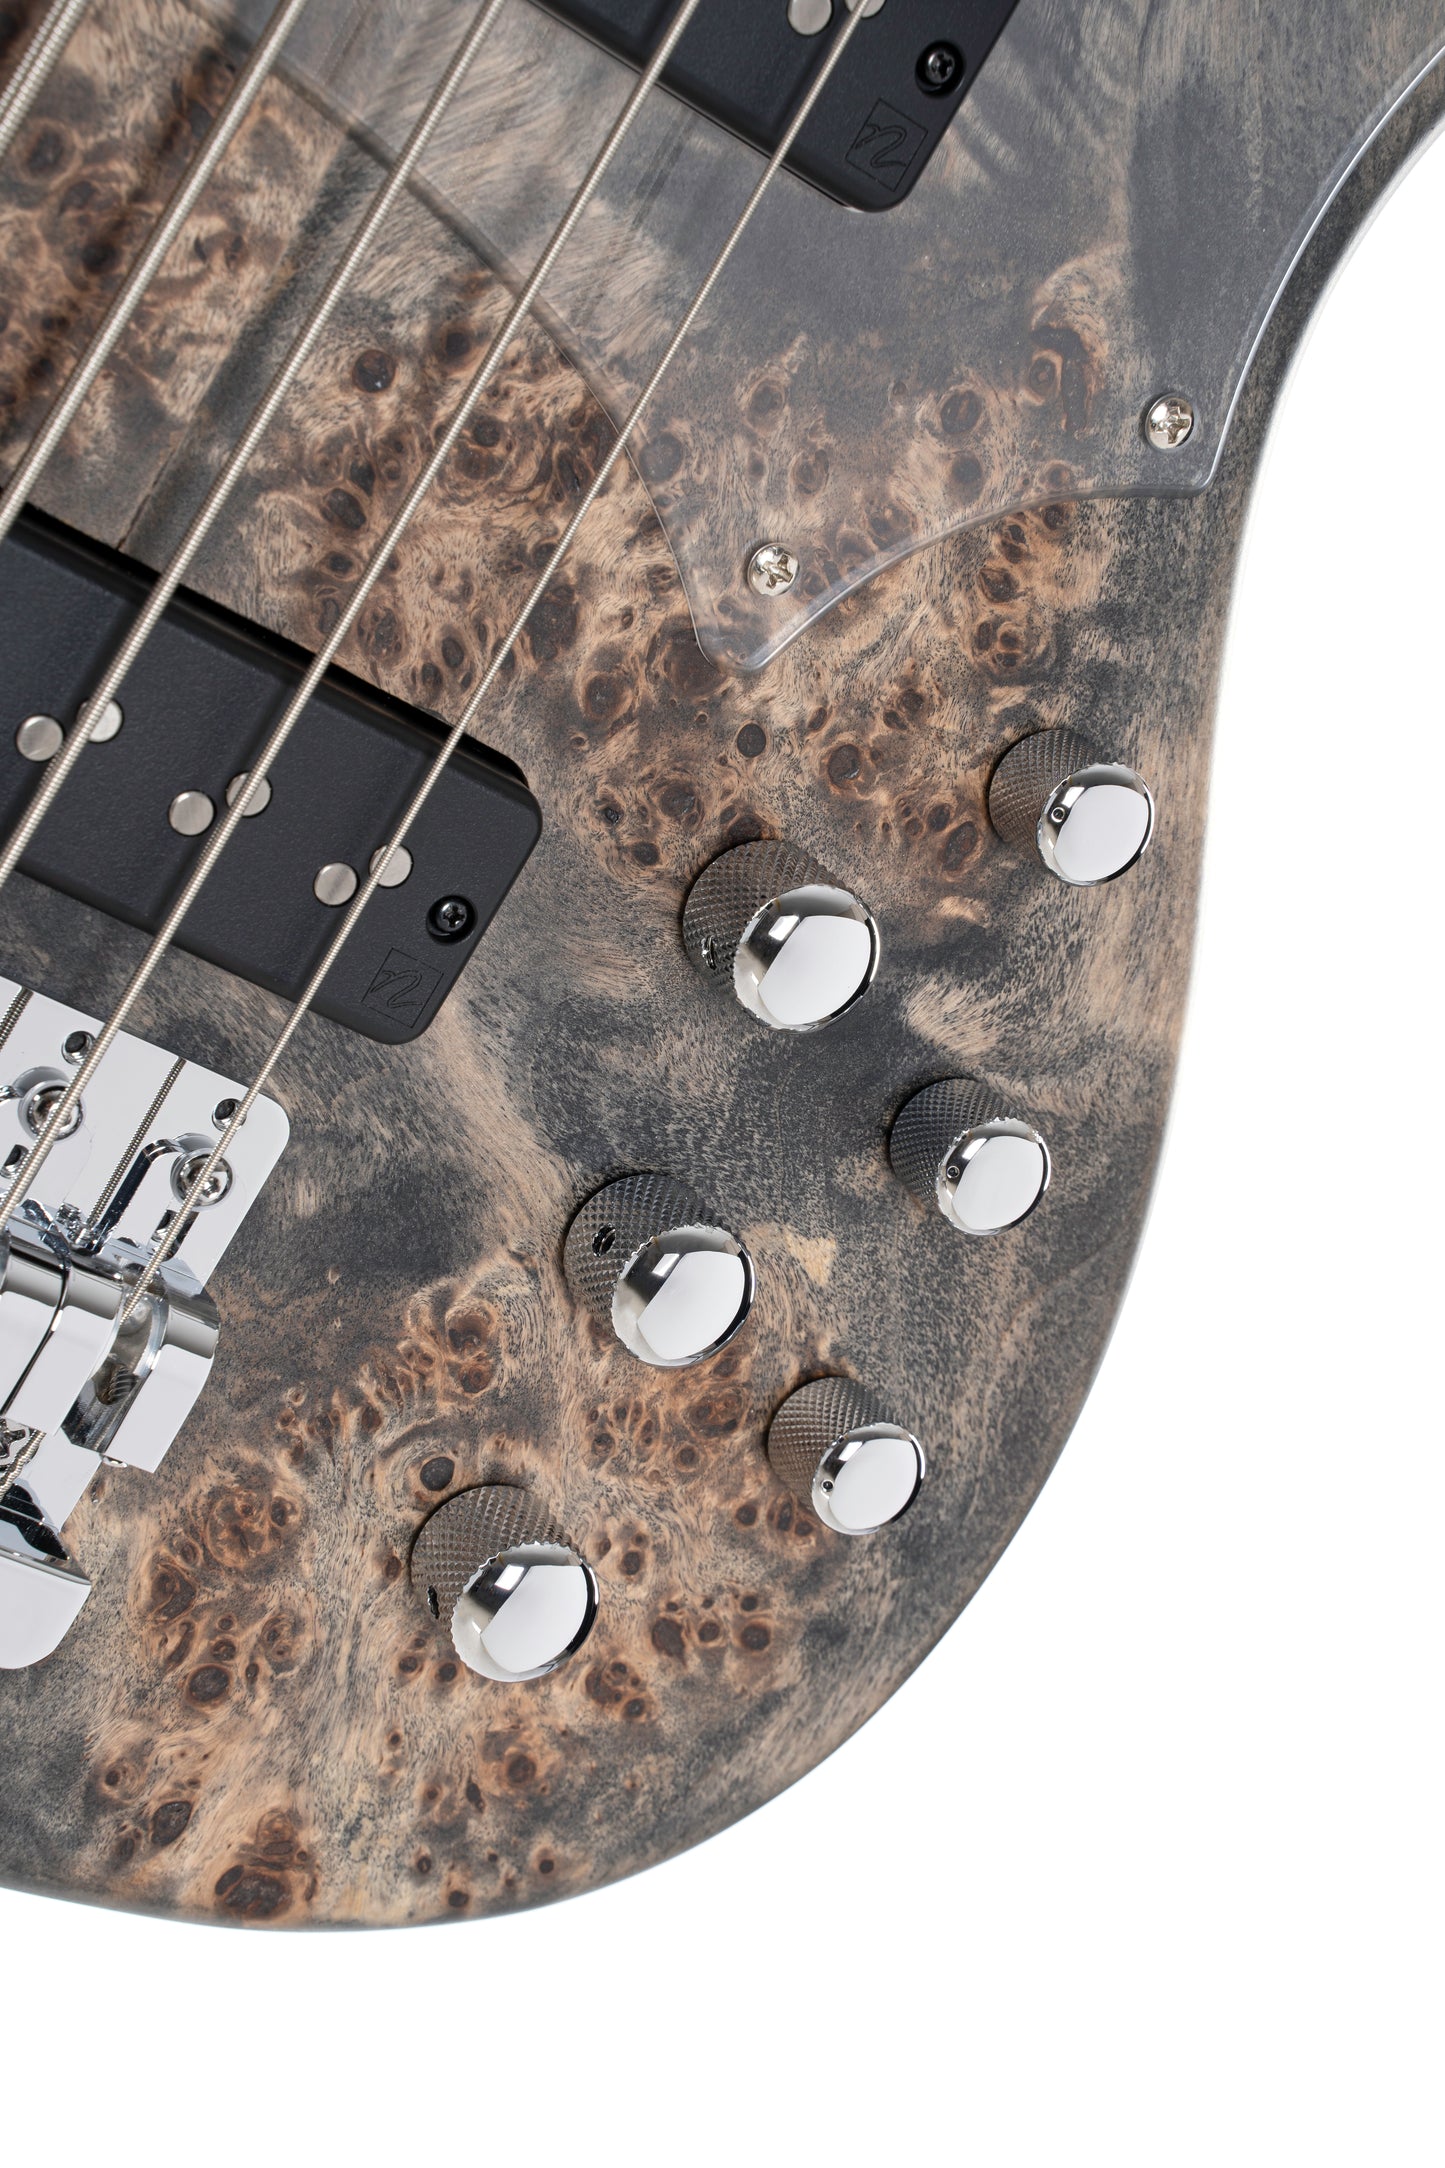 Cort GB Series Modern 5 String Bass Guitar. Open Pore Charcoal Grey